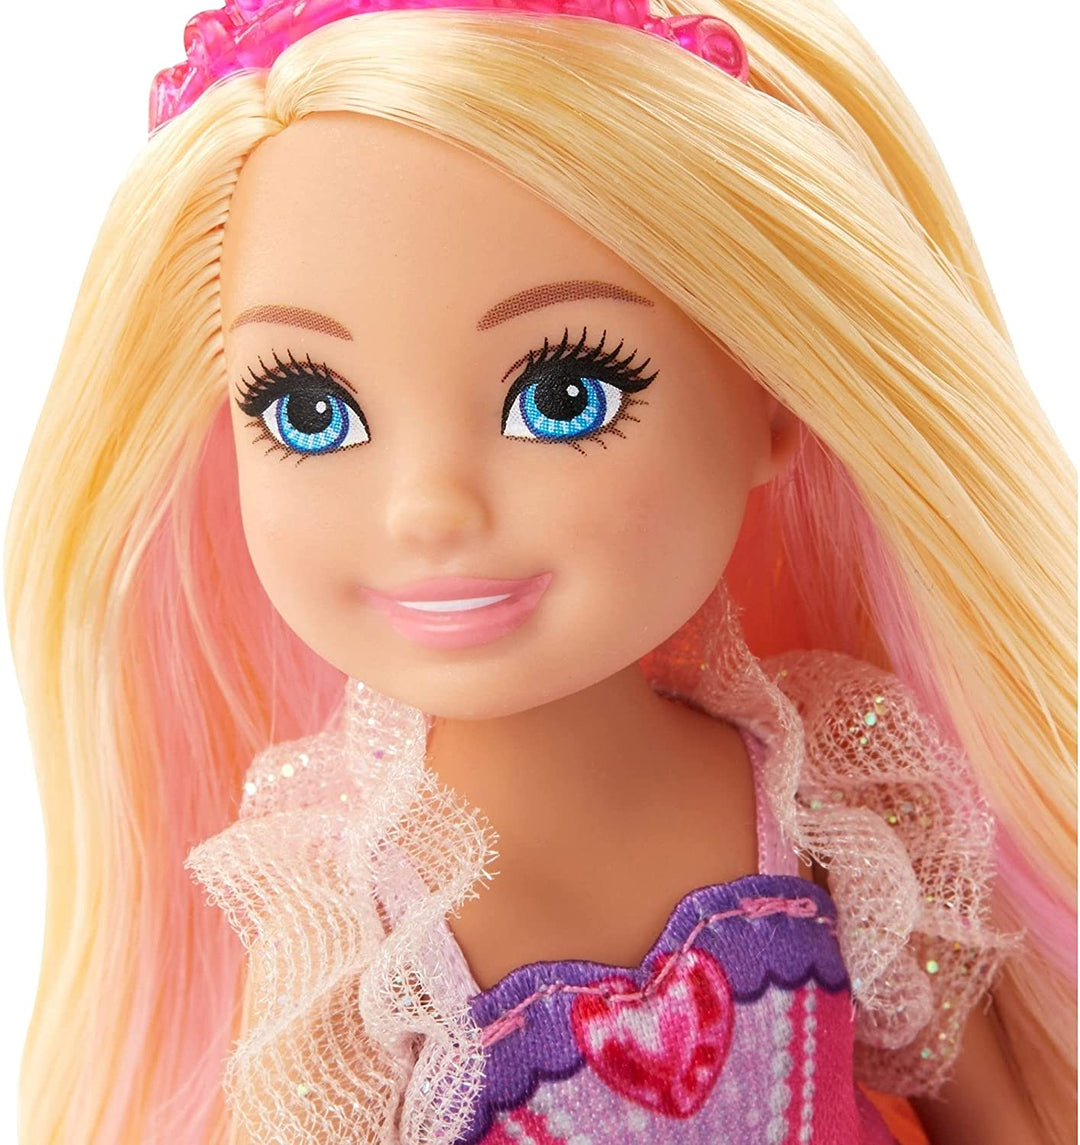 Barbie GJK17 Dreamtopia Doll and Unicorns